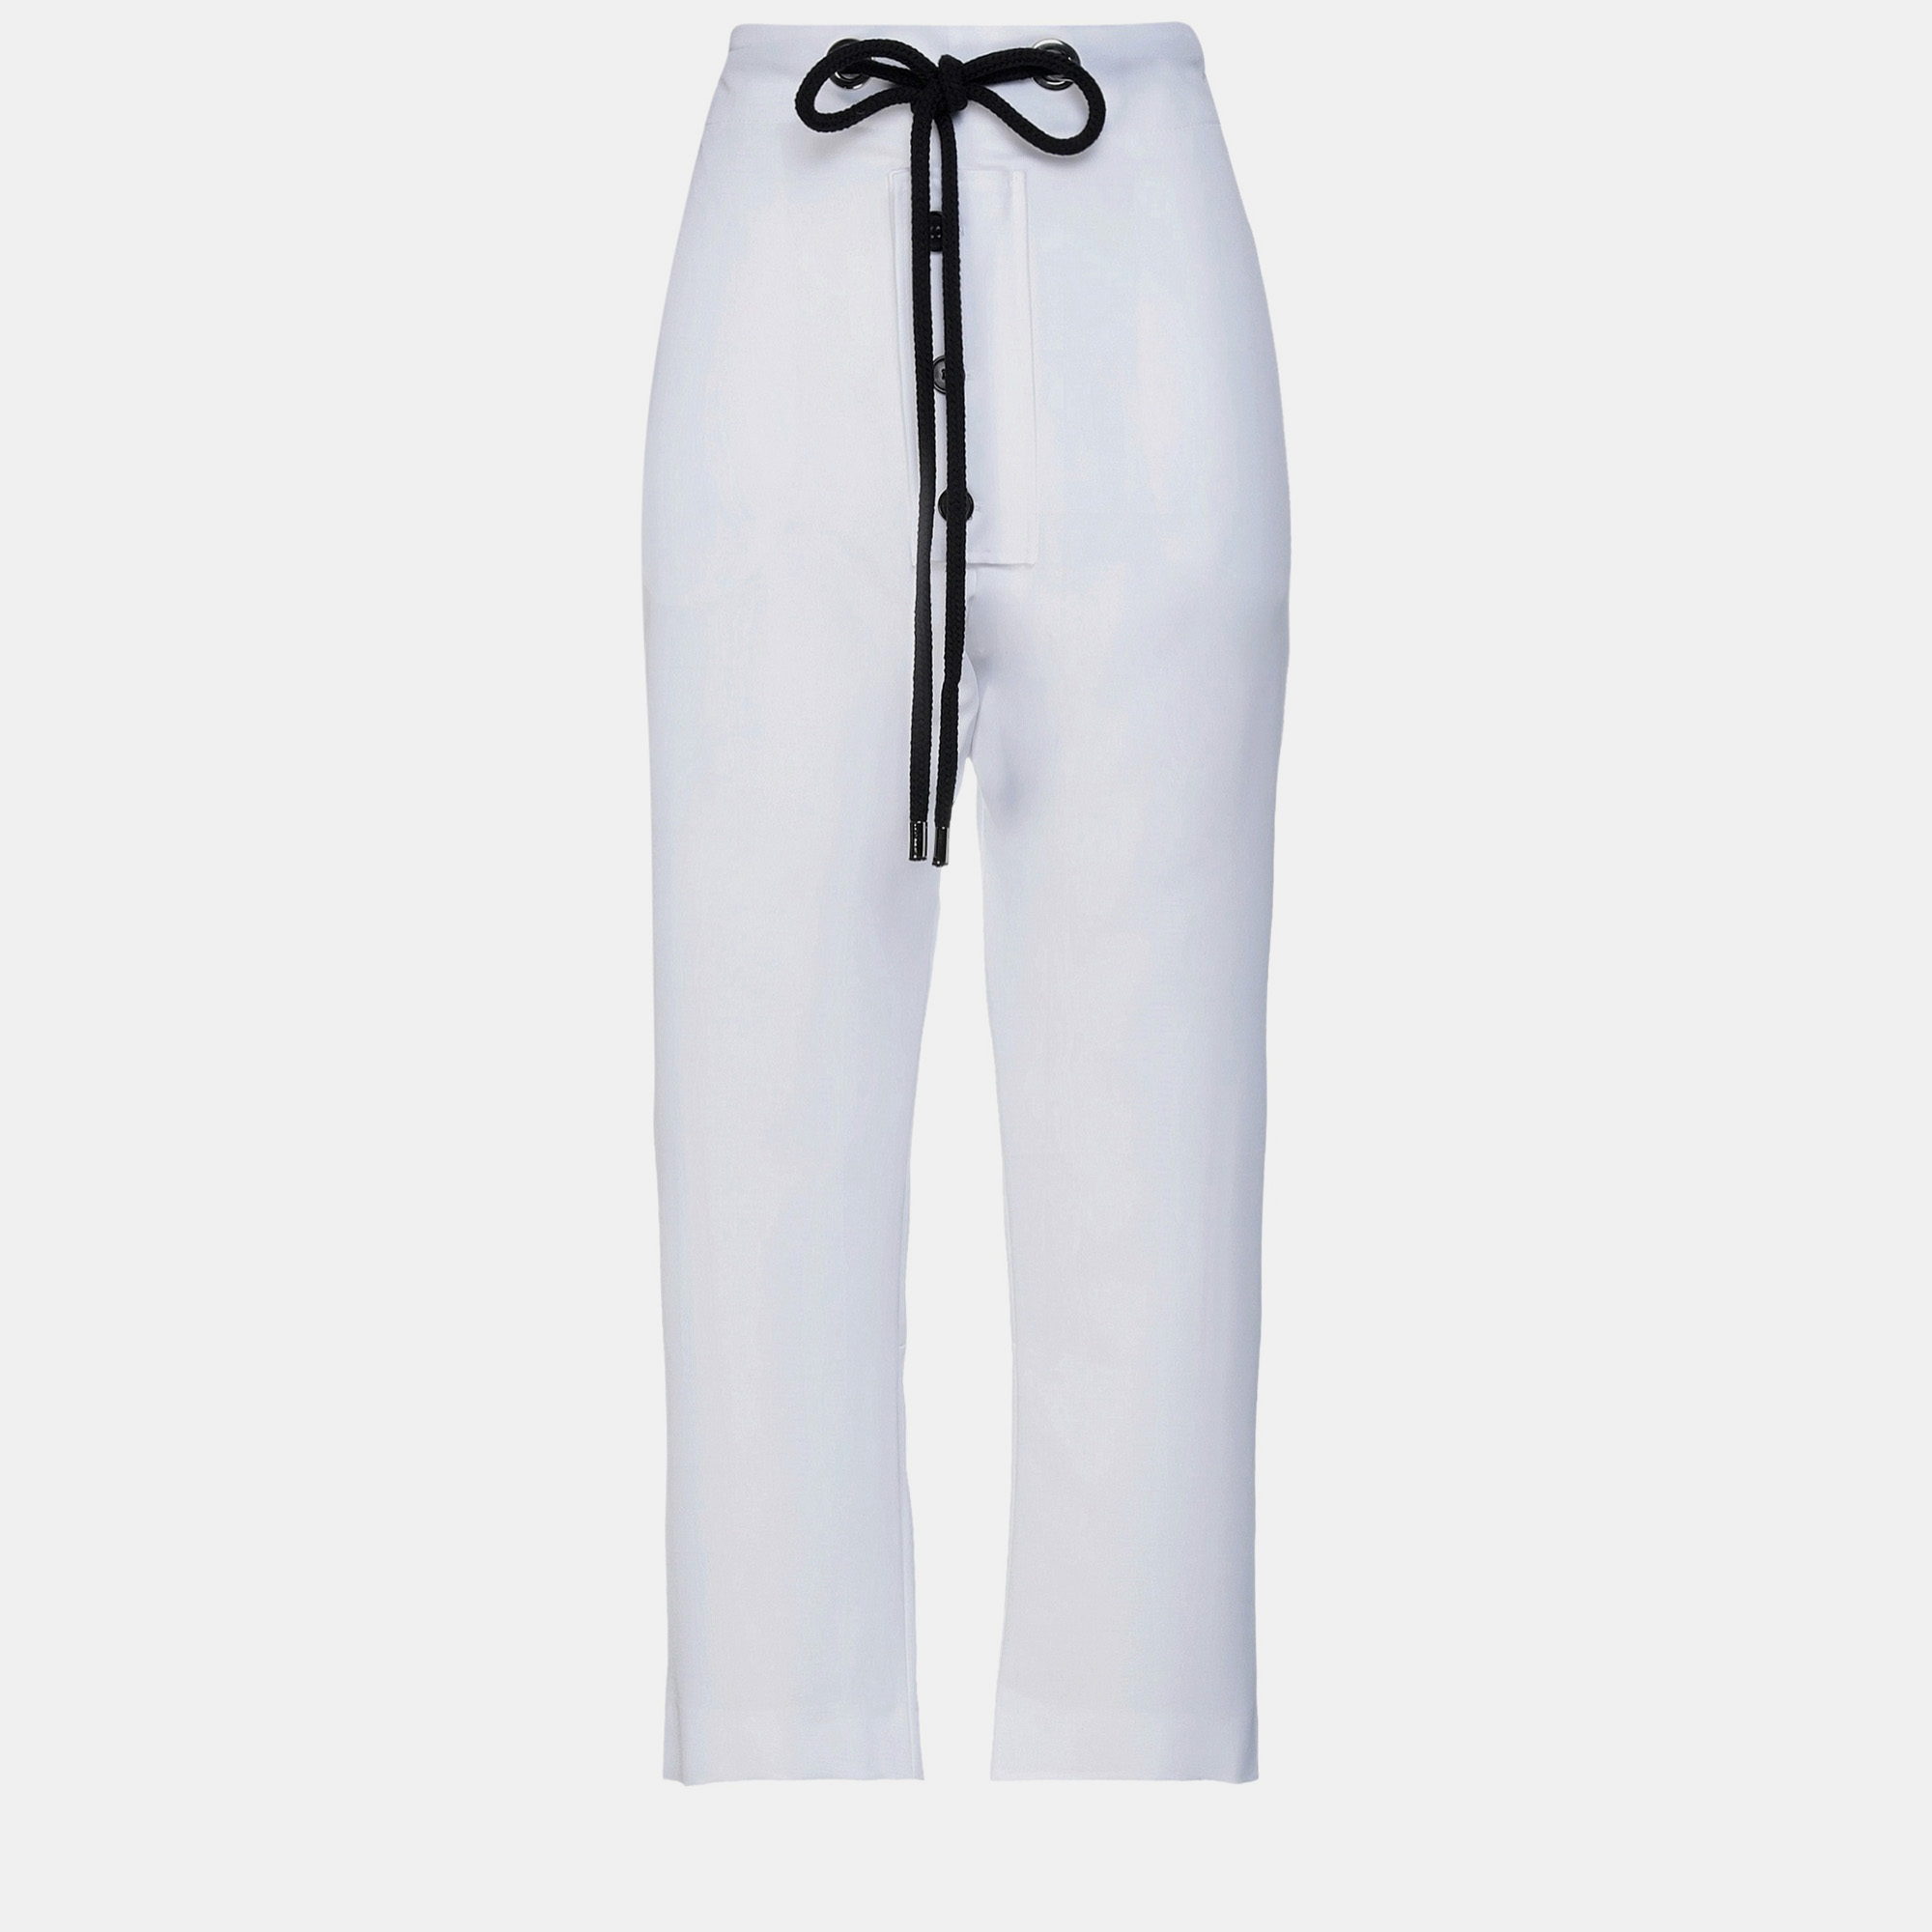 Marni white polyester straight leg pants l (it 44)